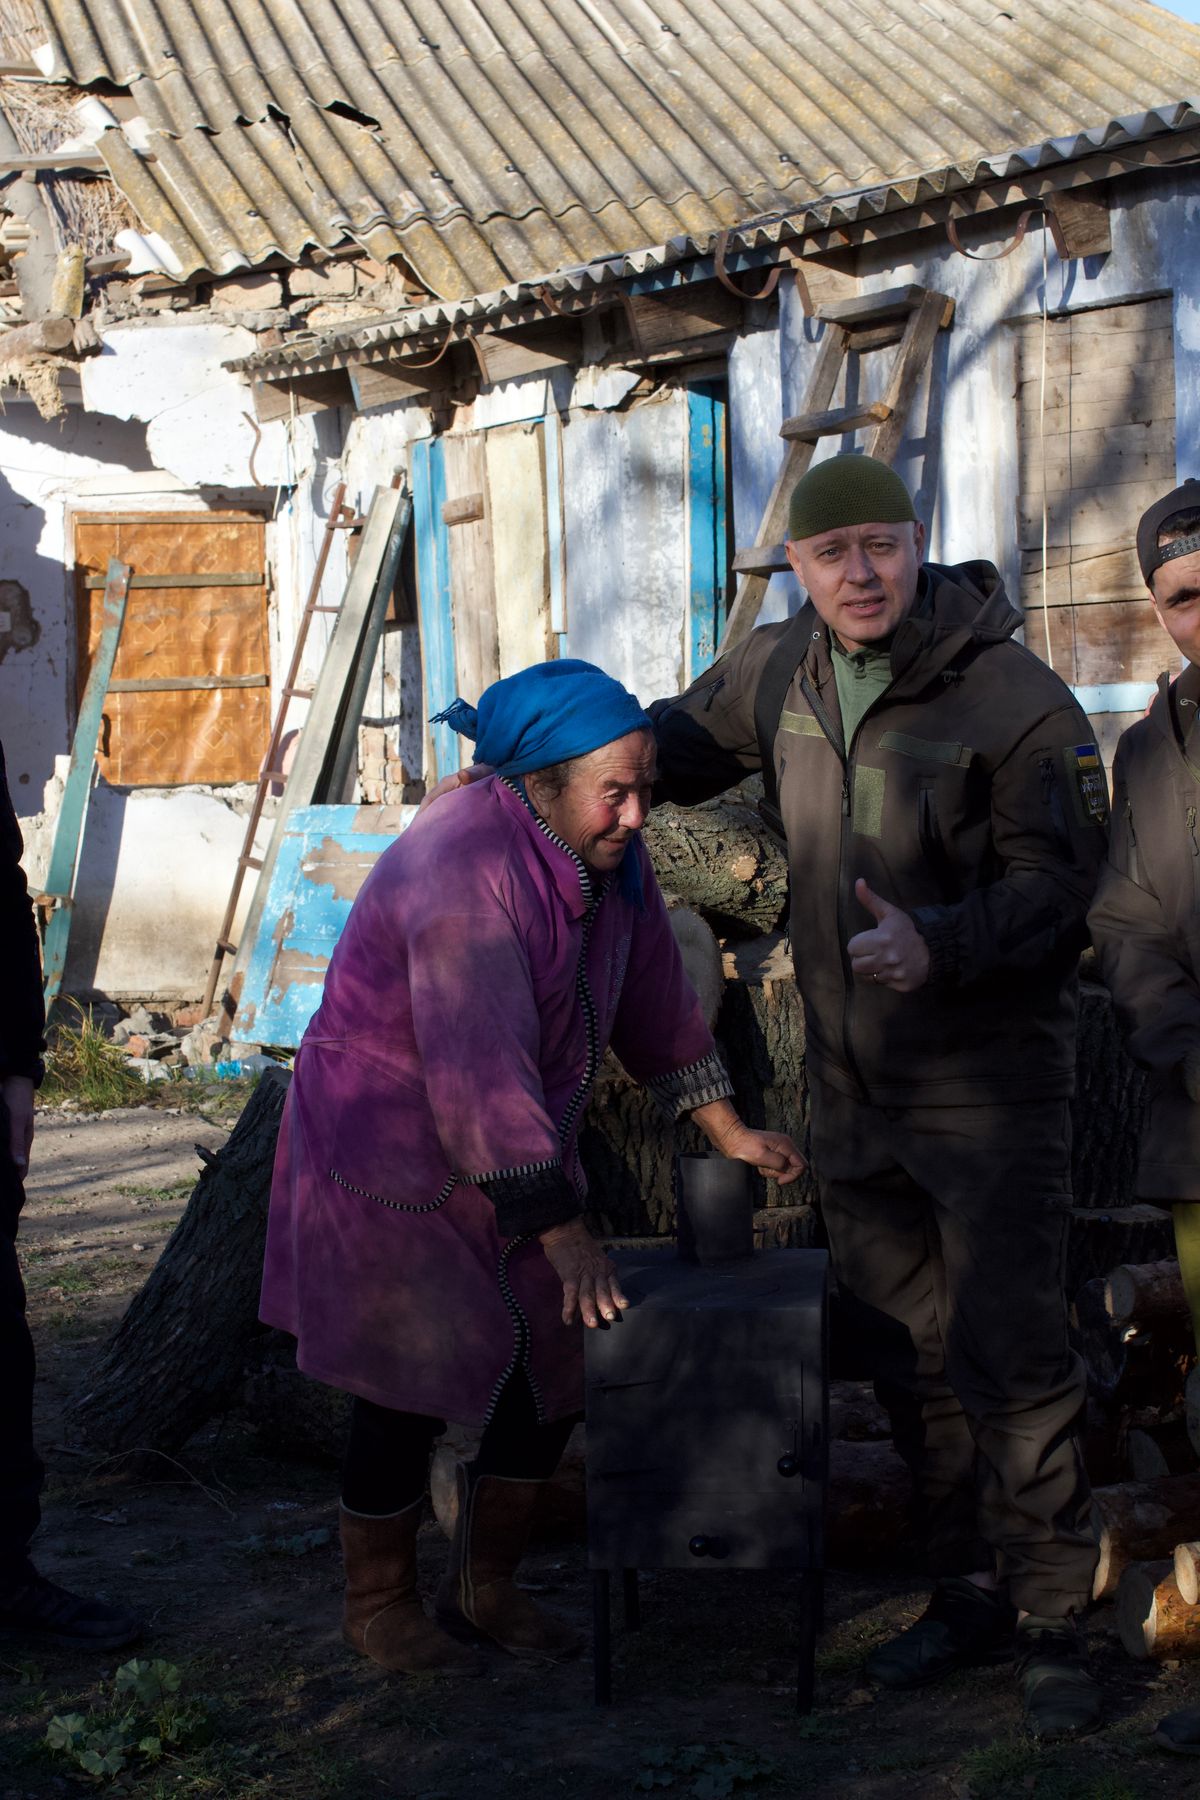 Winter in Ukraine: The Fight for Warmth